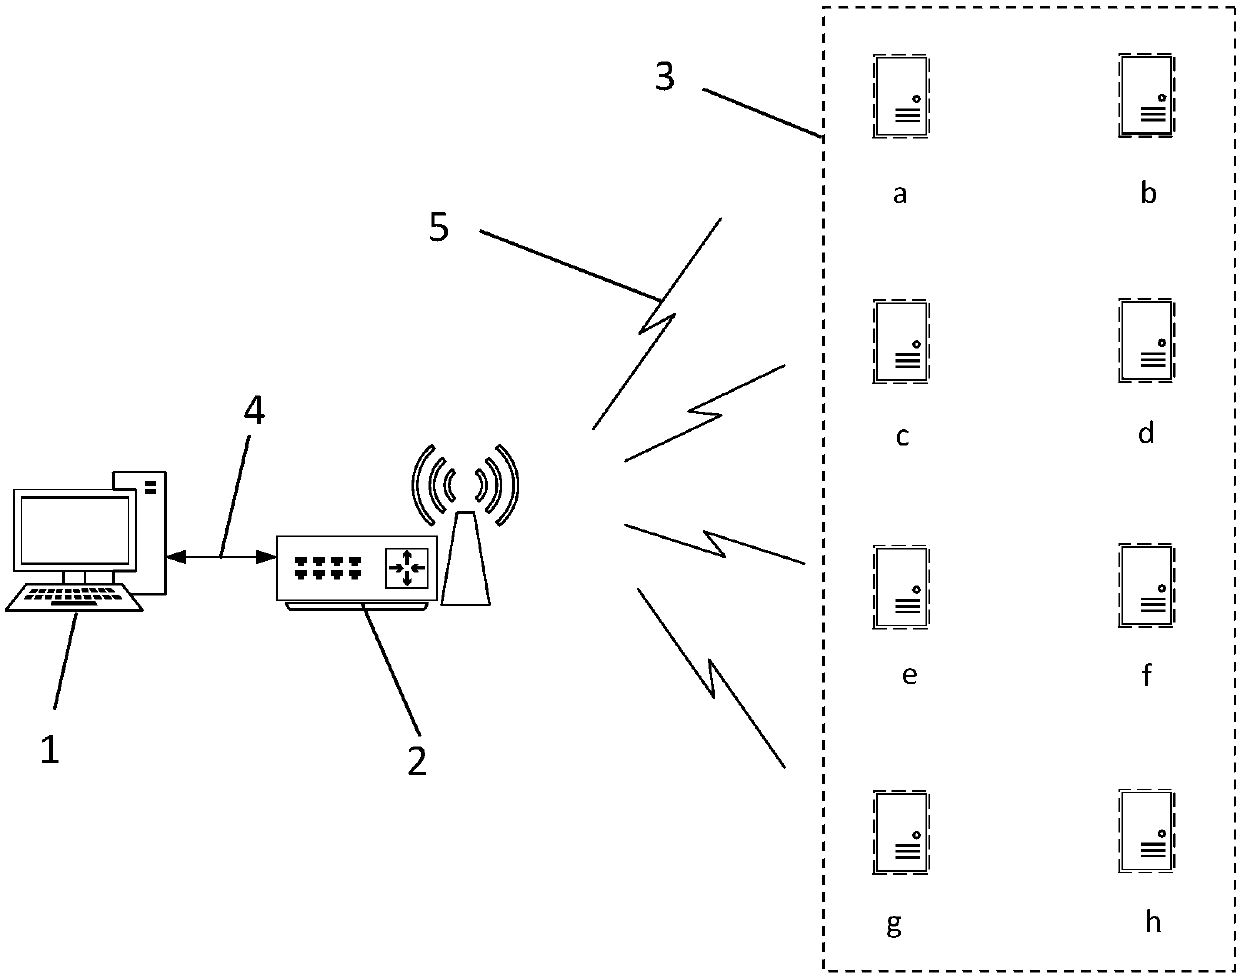 GNSS receiver batch configuration method